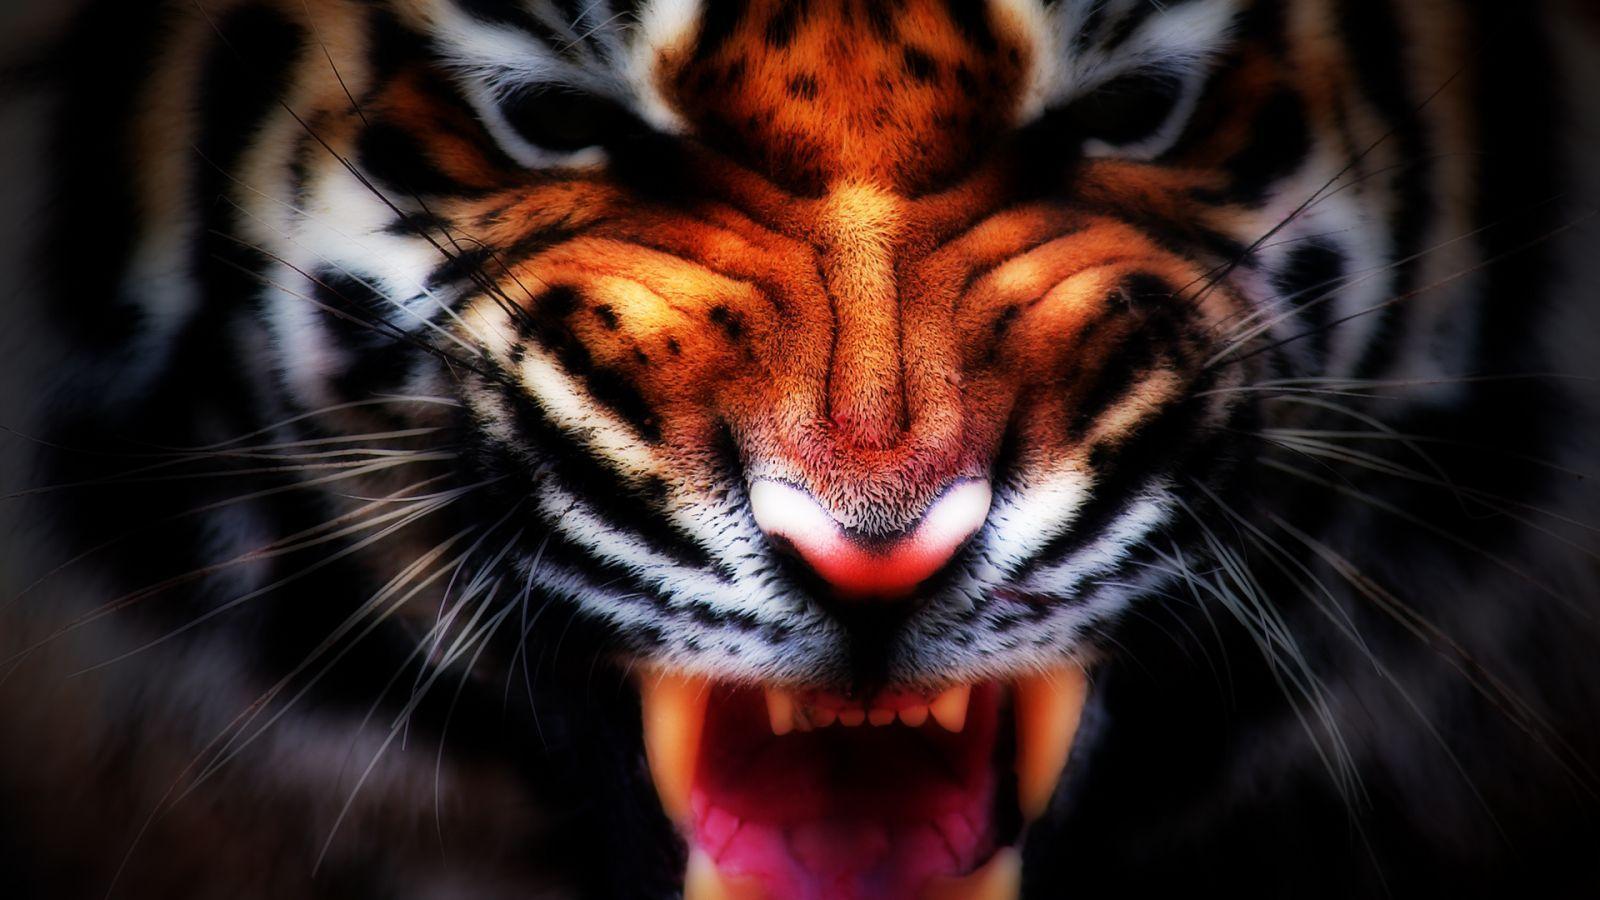 Tiger 3D HD Desktop Wallpapers 6516 - Amazing Wallpaperz